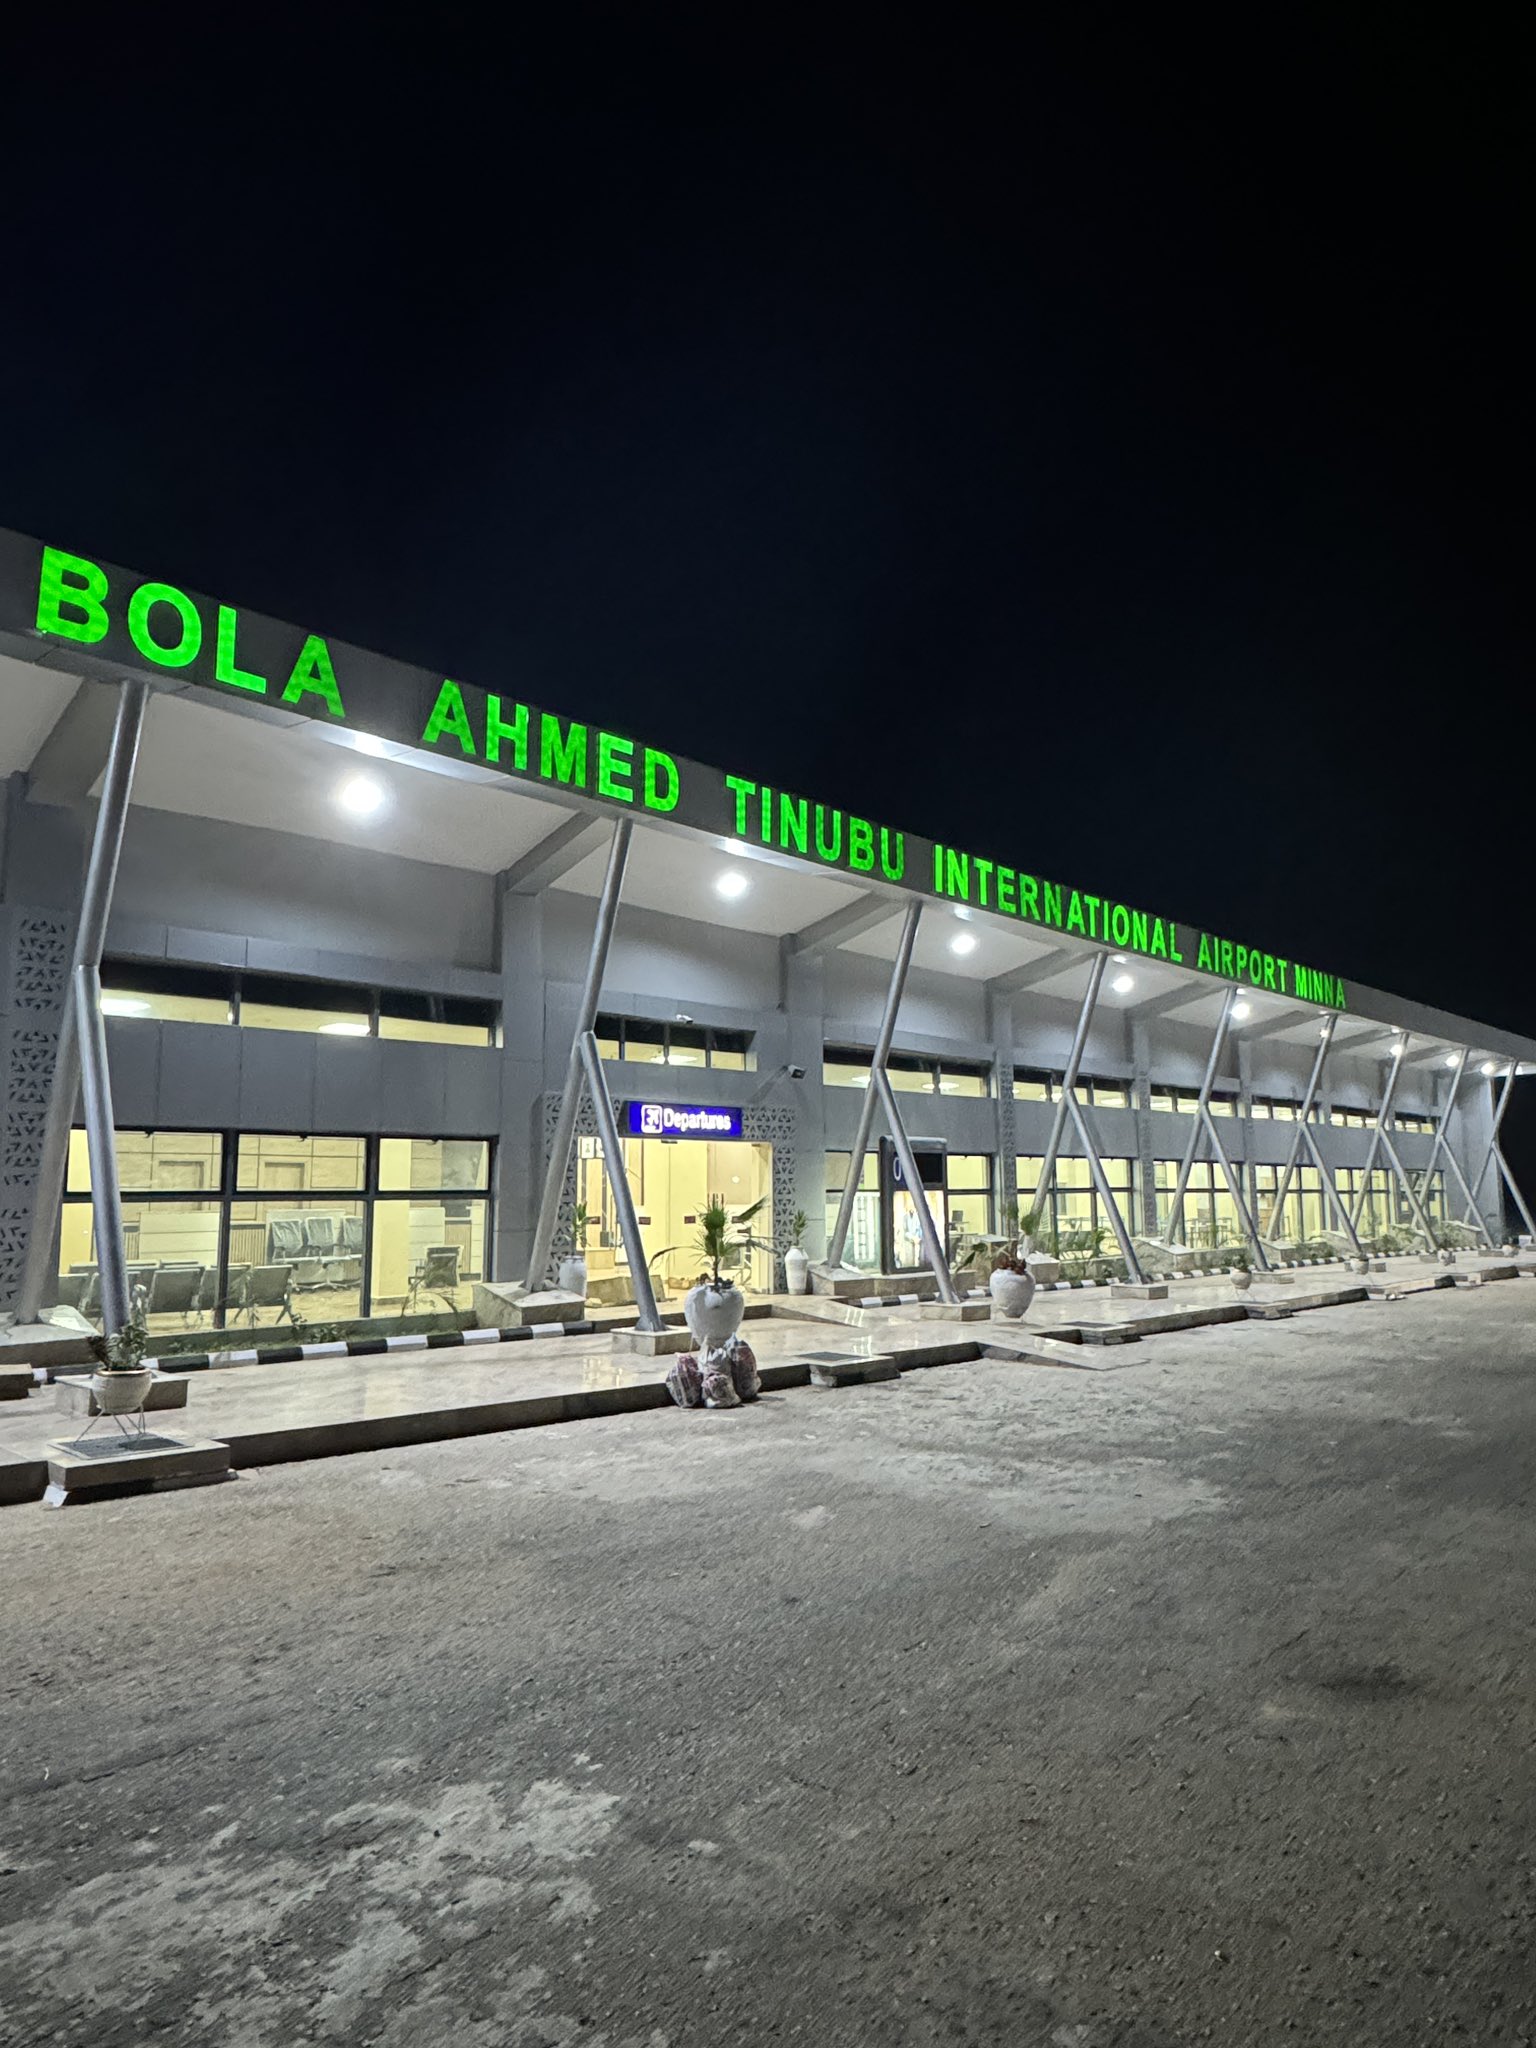 Niger State Governor, Umaru Bago has renamed the Minna Airport the Bola Ahmed Tinubu International Airport